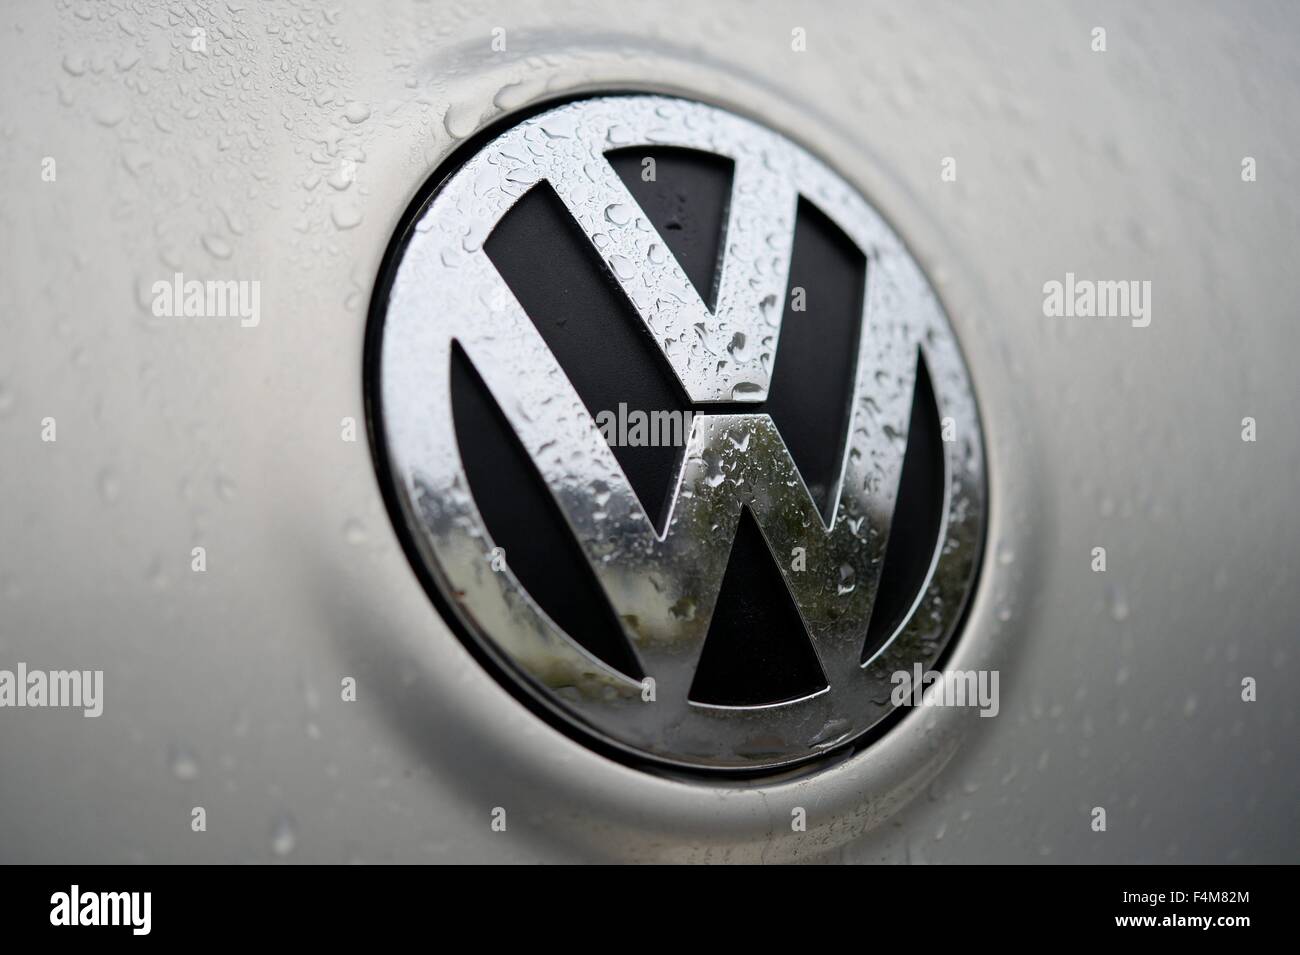 VW logo, Germany, city of Osterode, 20. October 2015. Photo: Frank May Stock Photo